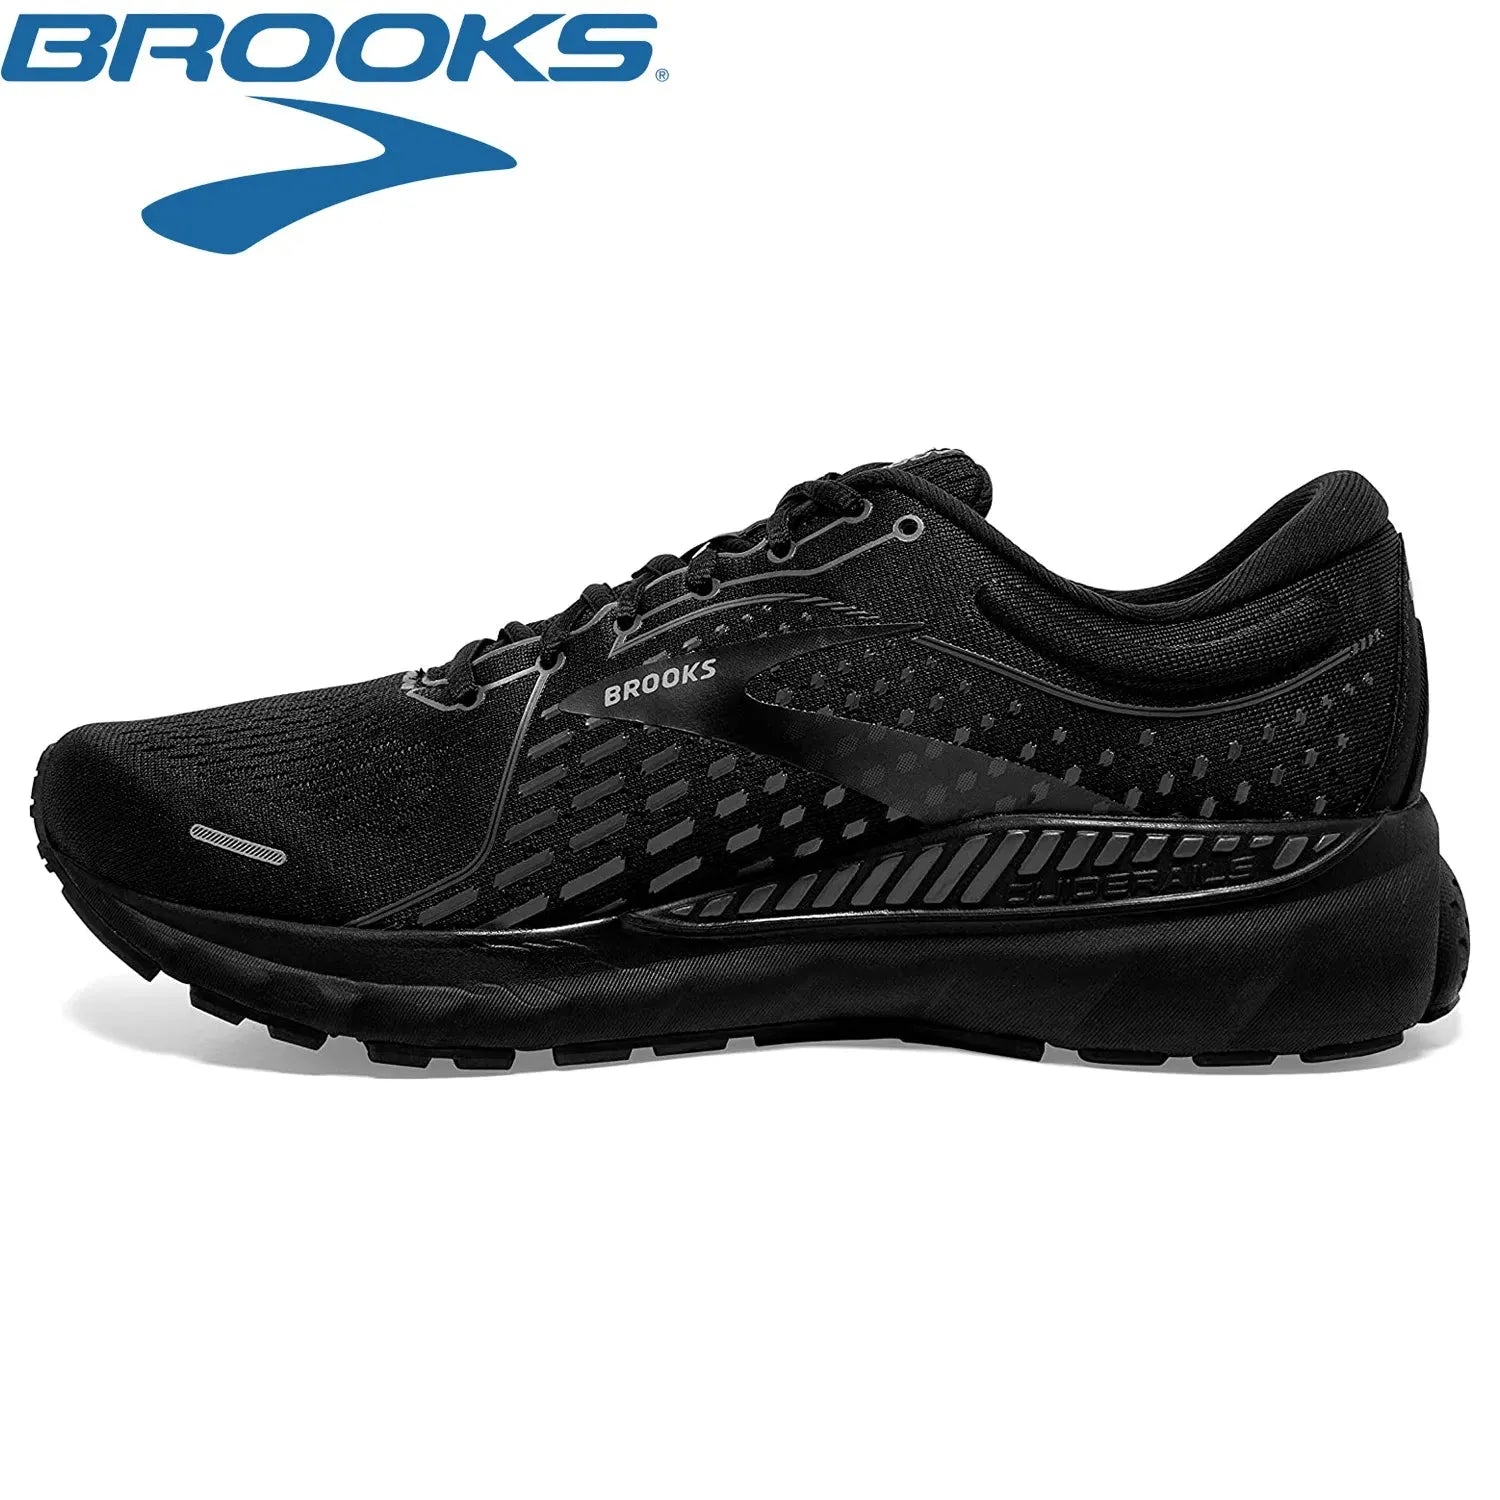 BROOKS Running Shoes Men Adrenaline Gts 21 Replace Outdoor Jogging Shoes Light Breathable Comfortable Men's Original Sneakers